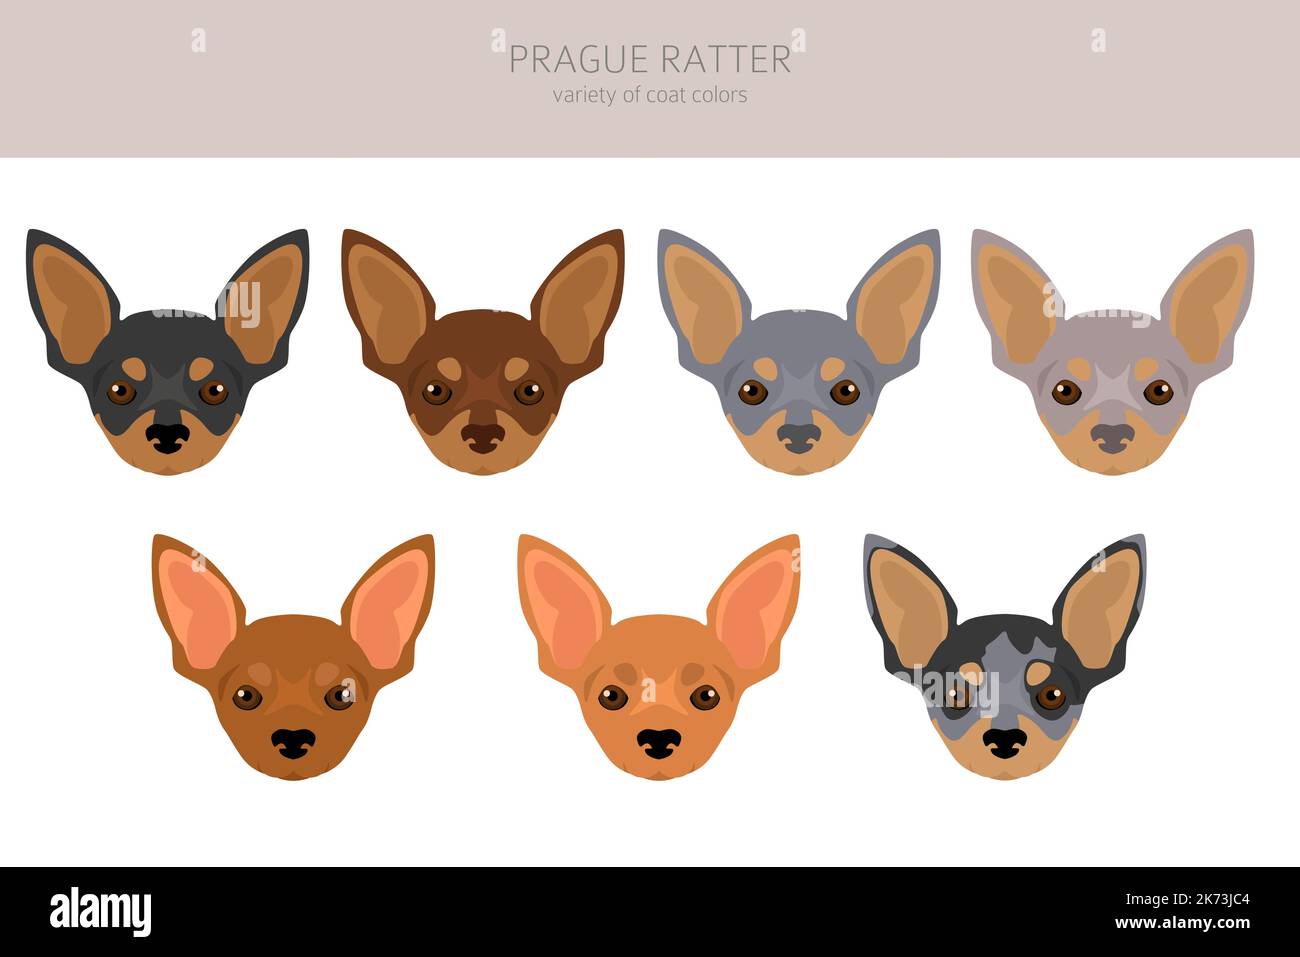 Prague Ratter clipart. All coat colors set.  All dog breeds characteristics infographic. Vector illustration Stock Vector